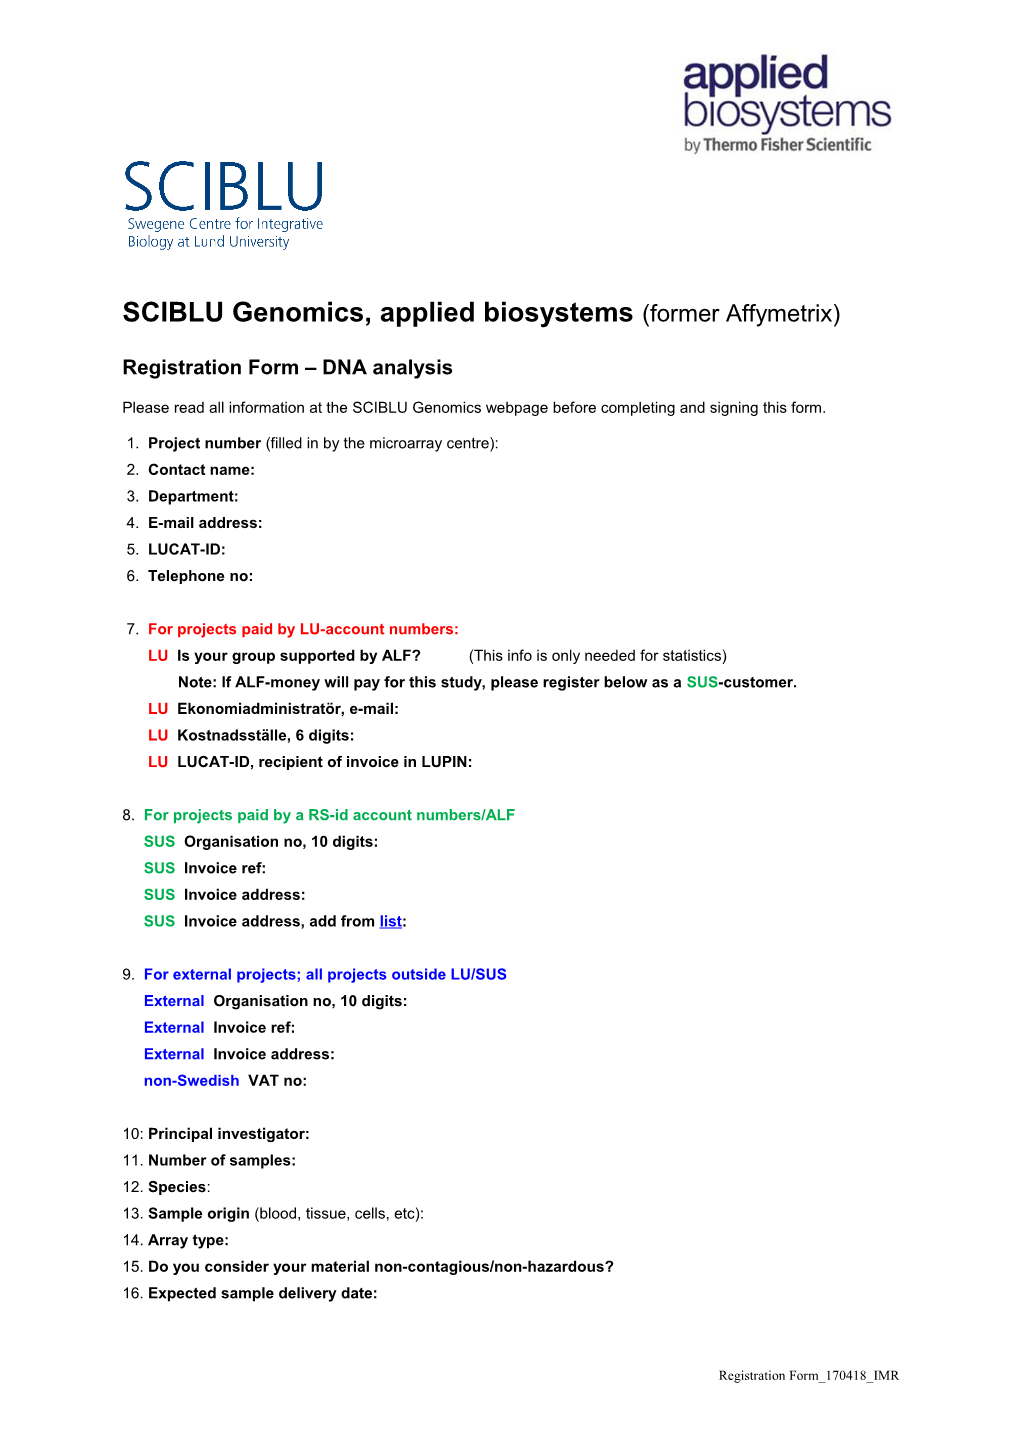 SCIBLU Genomics, Affymetrix